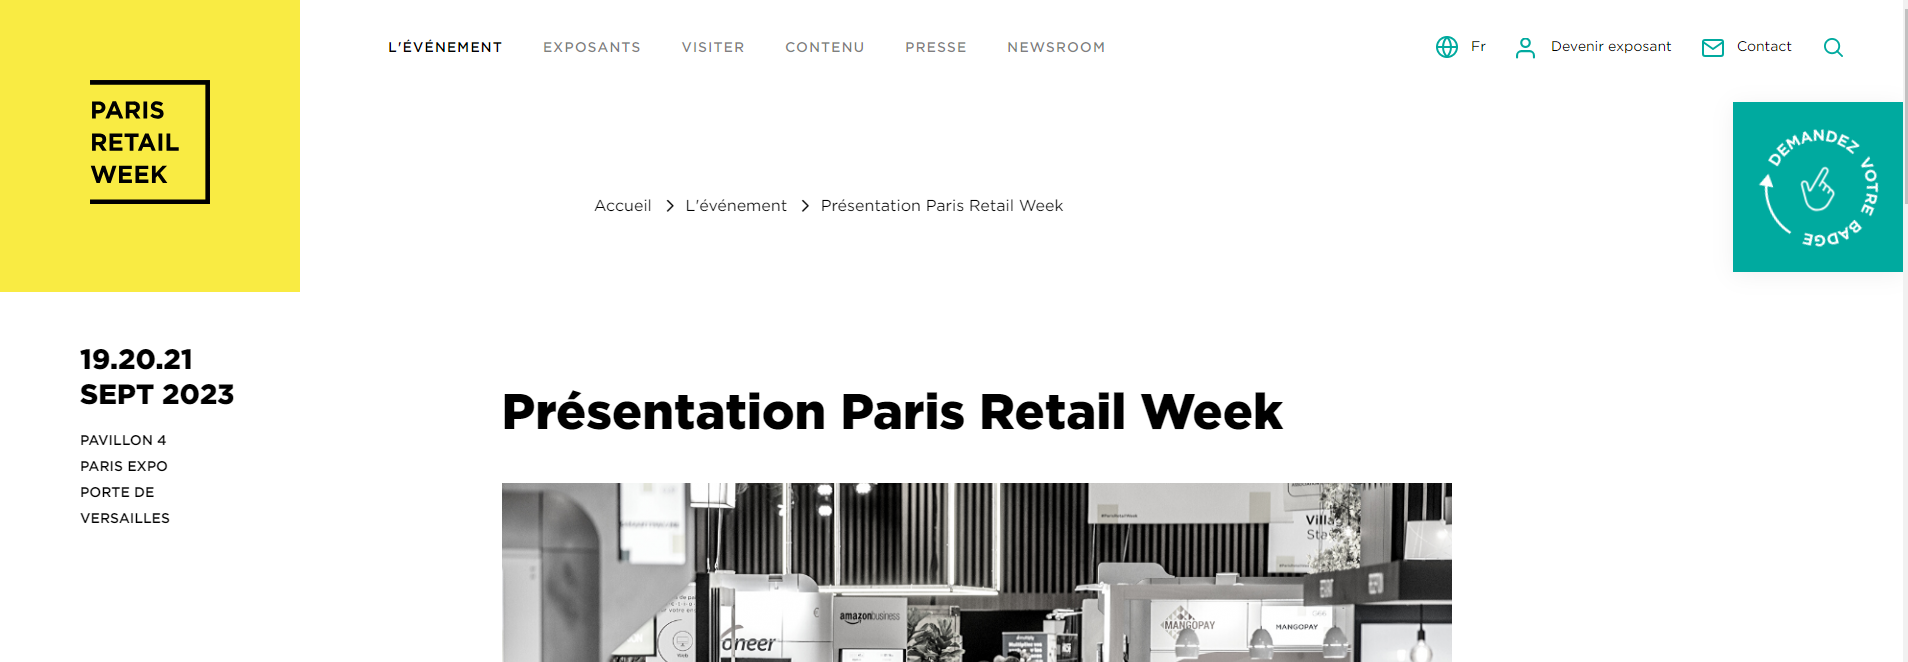 site evenement paris retail week ecommerce